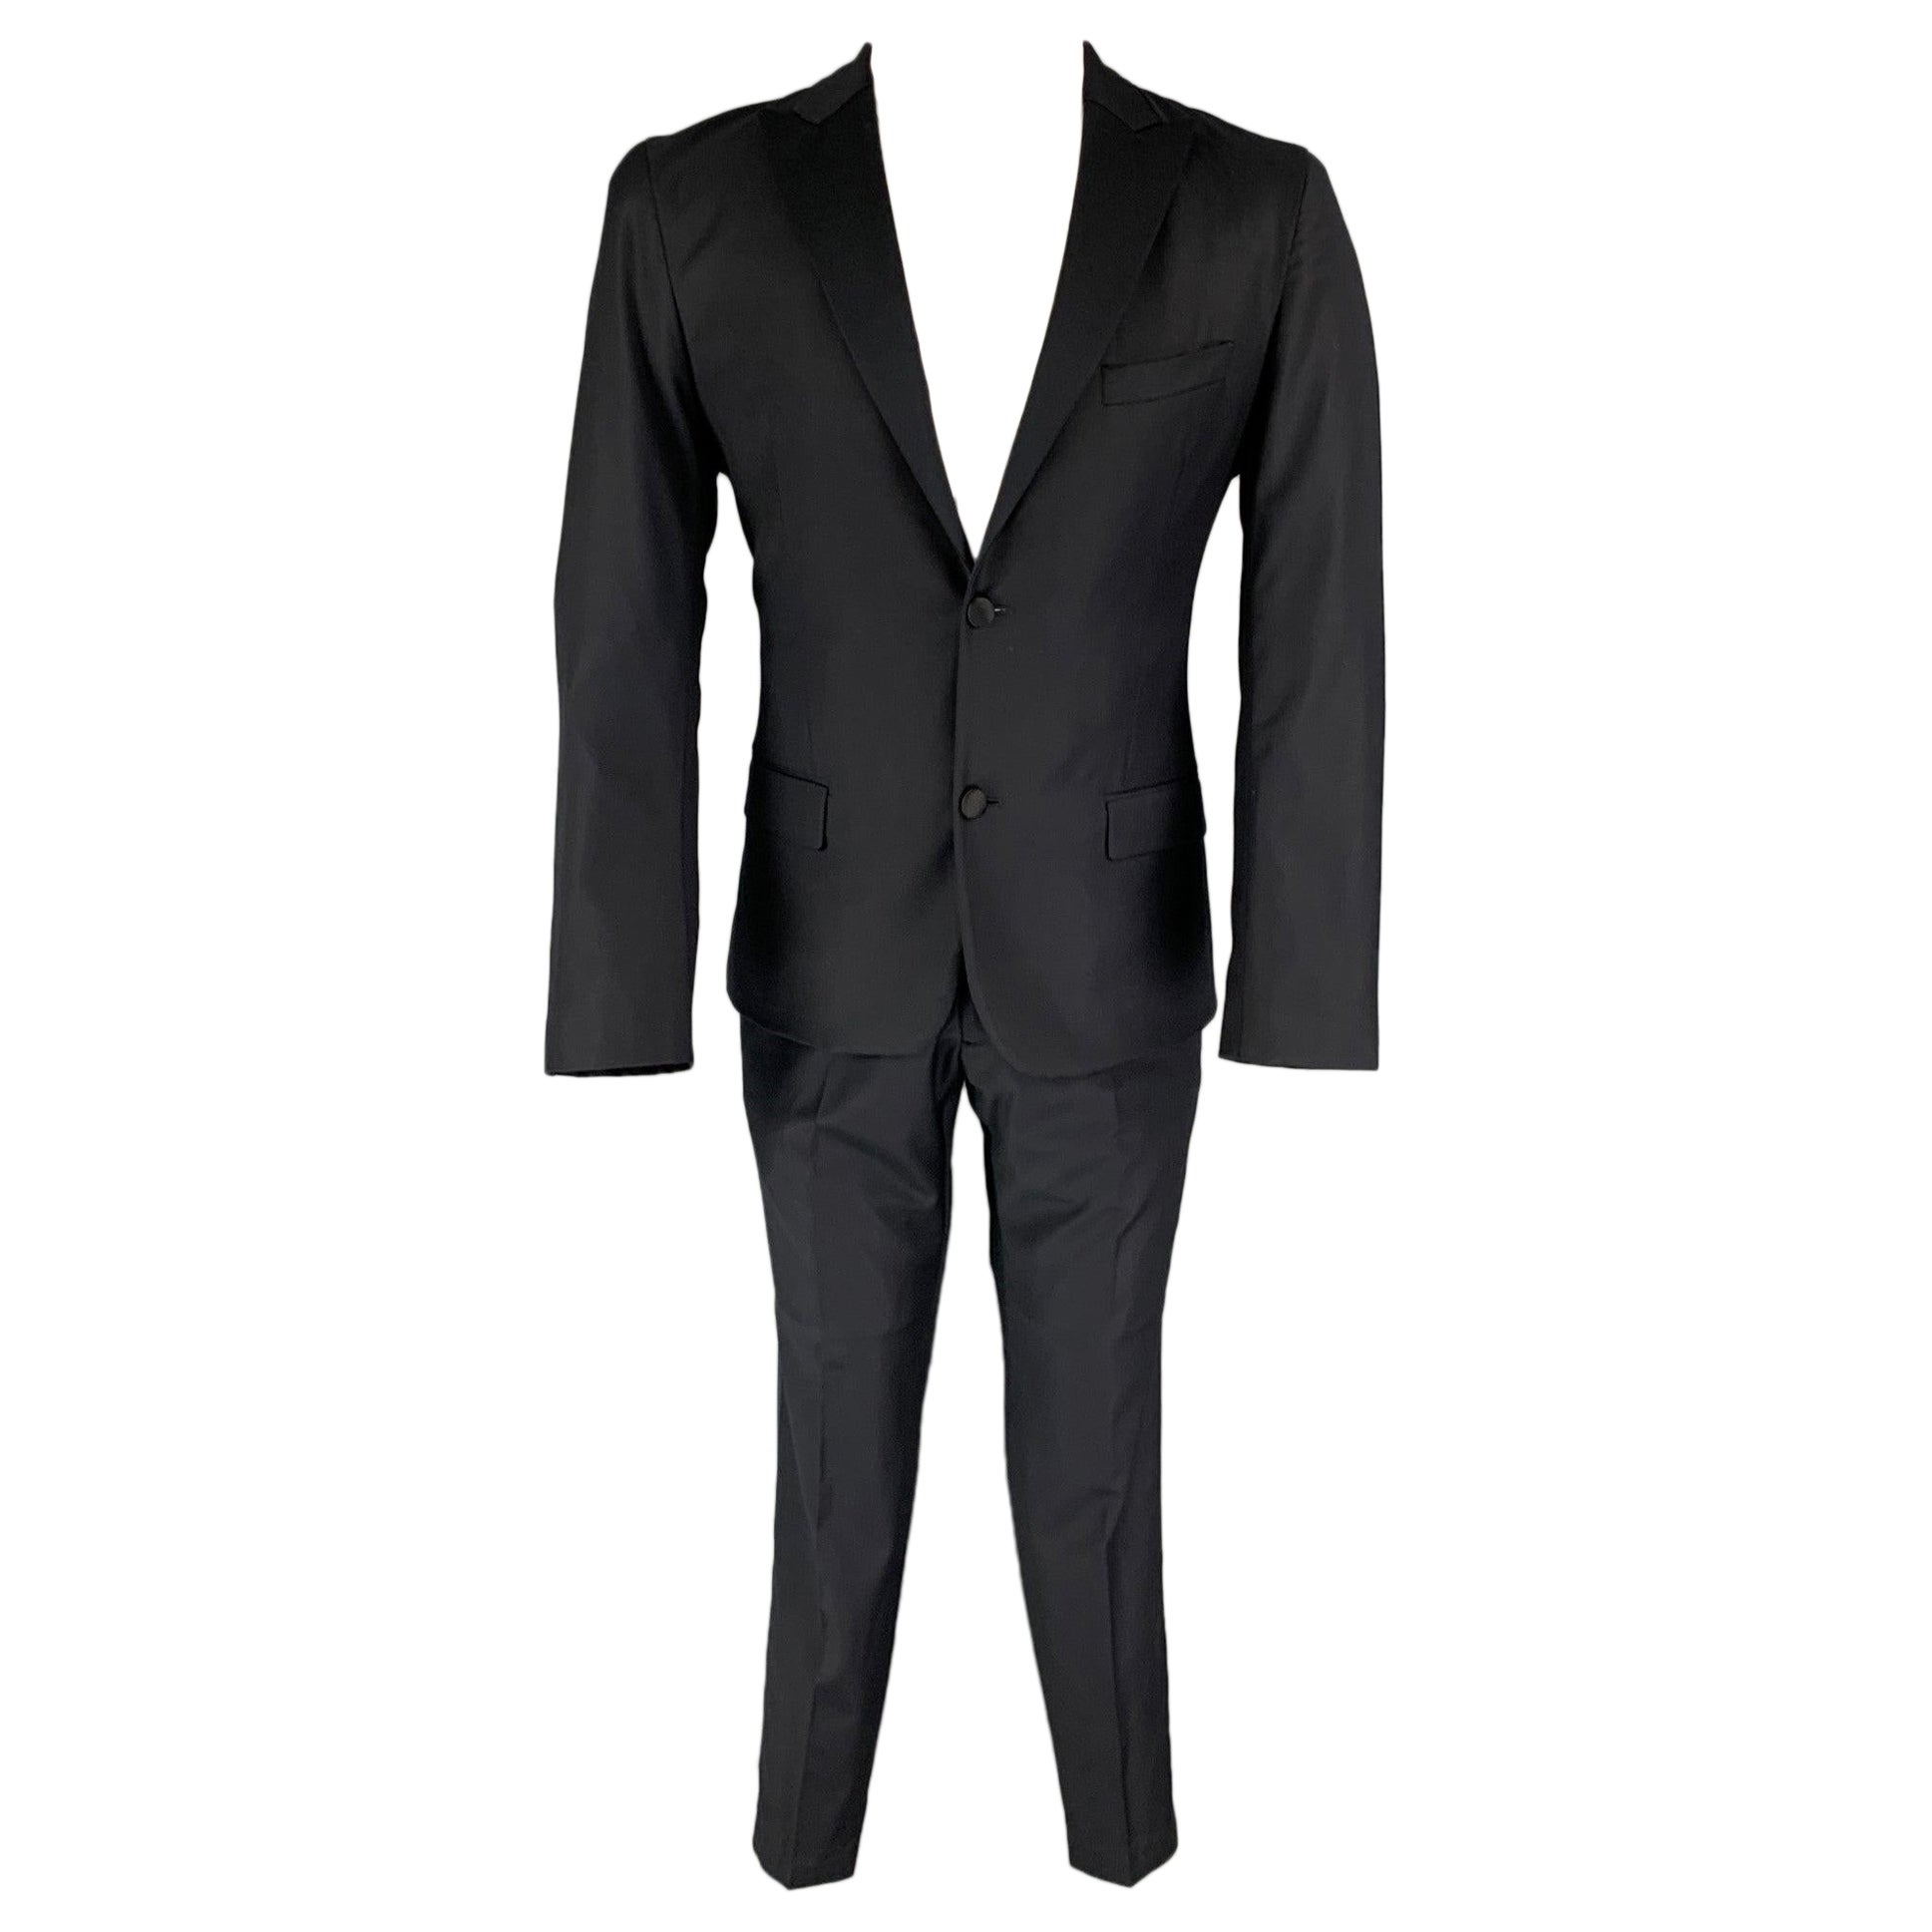 CALVIN KLEIN COLLECTION Size 38 Black Solid Wool Peak Lapel 32 32 Tuxedo